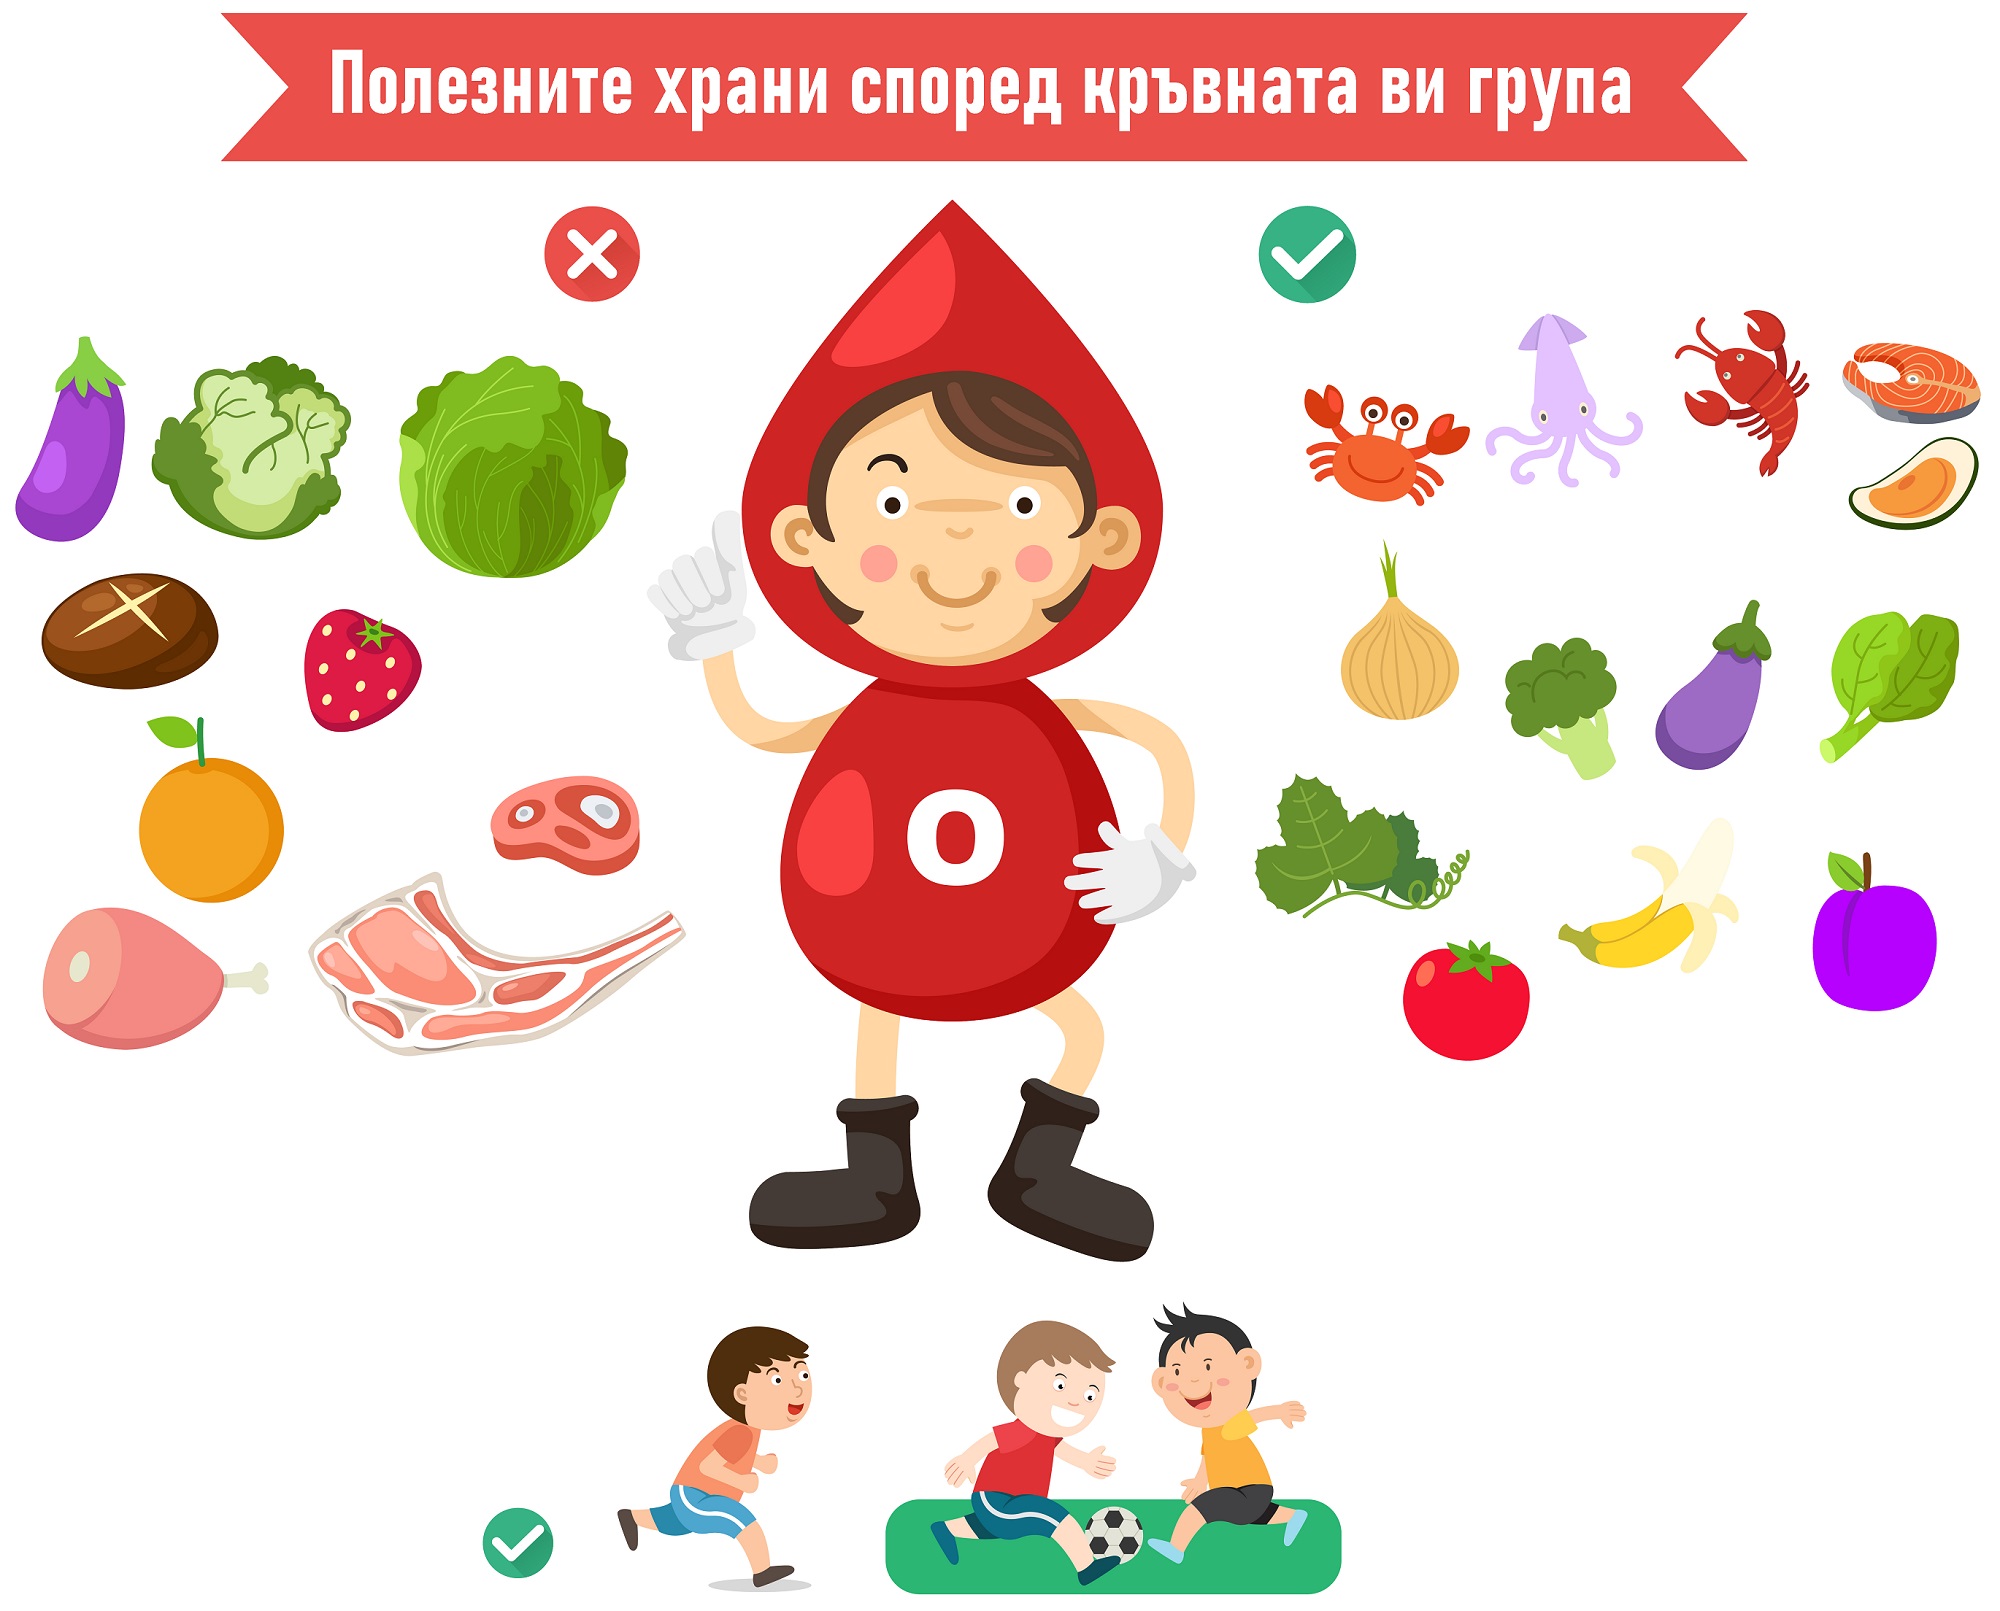 Полезните храни според кръвната група